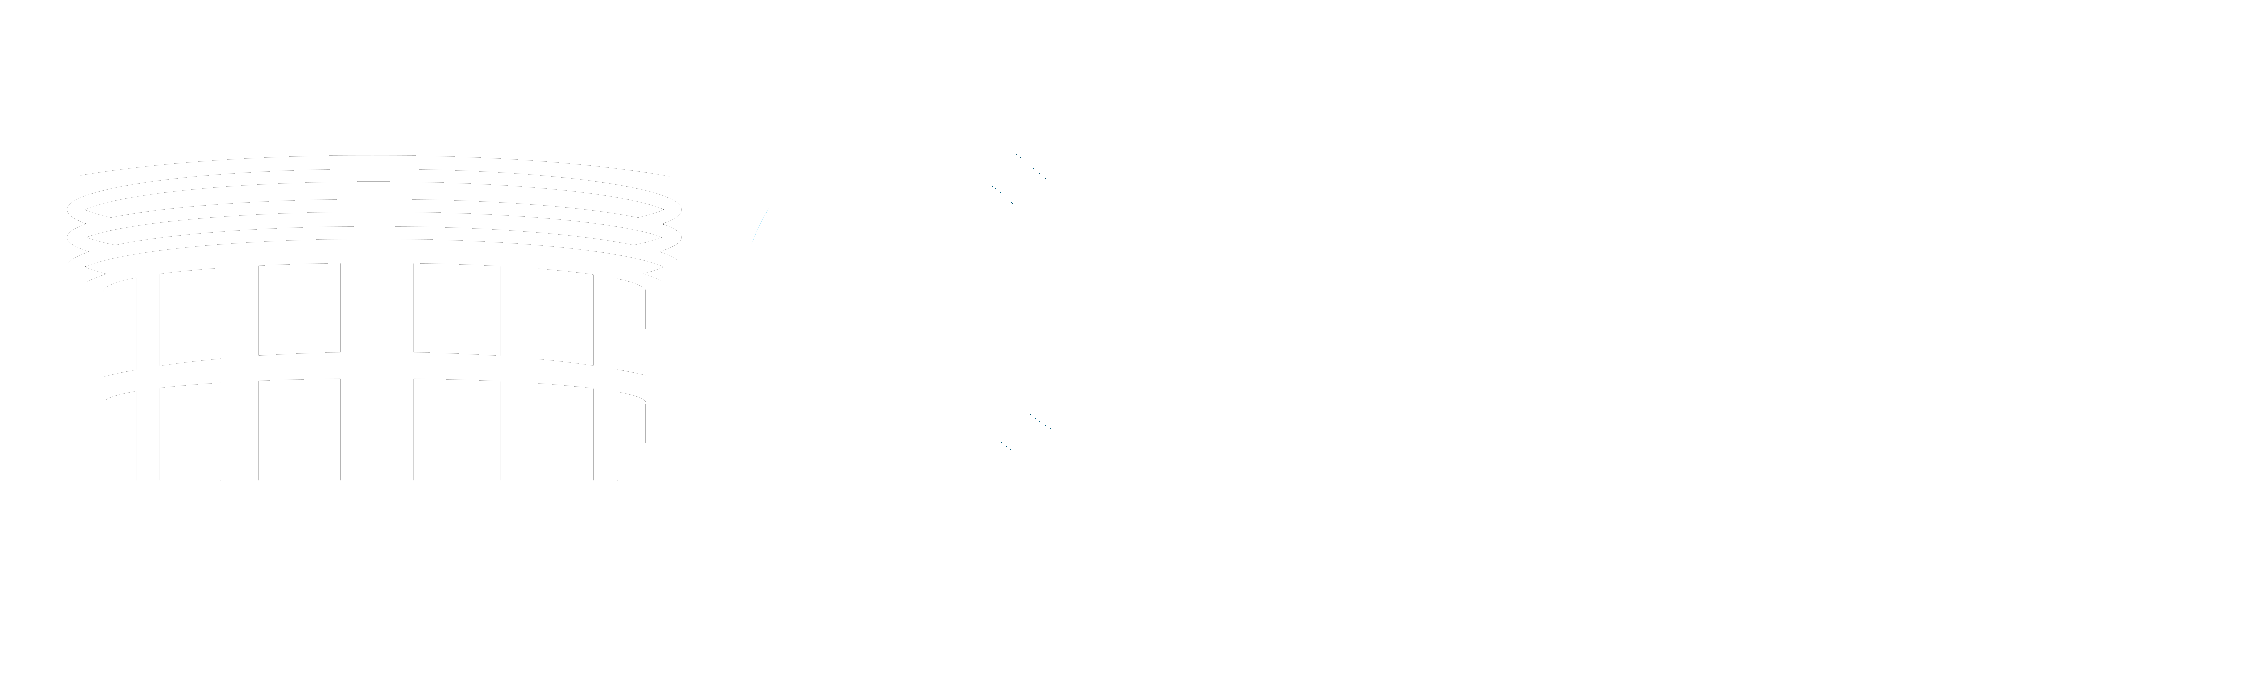 Orangeburg-Calhoun Technical College catalog